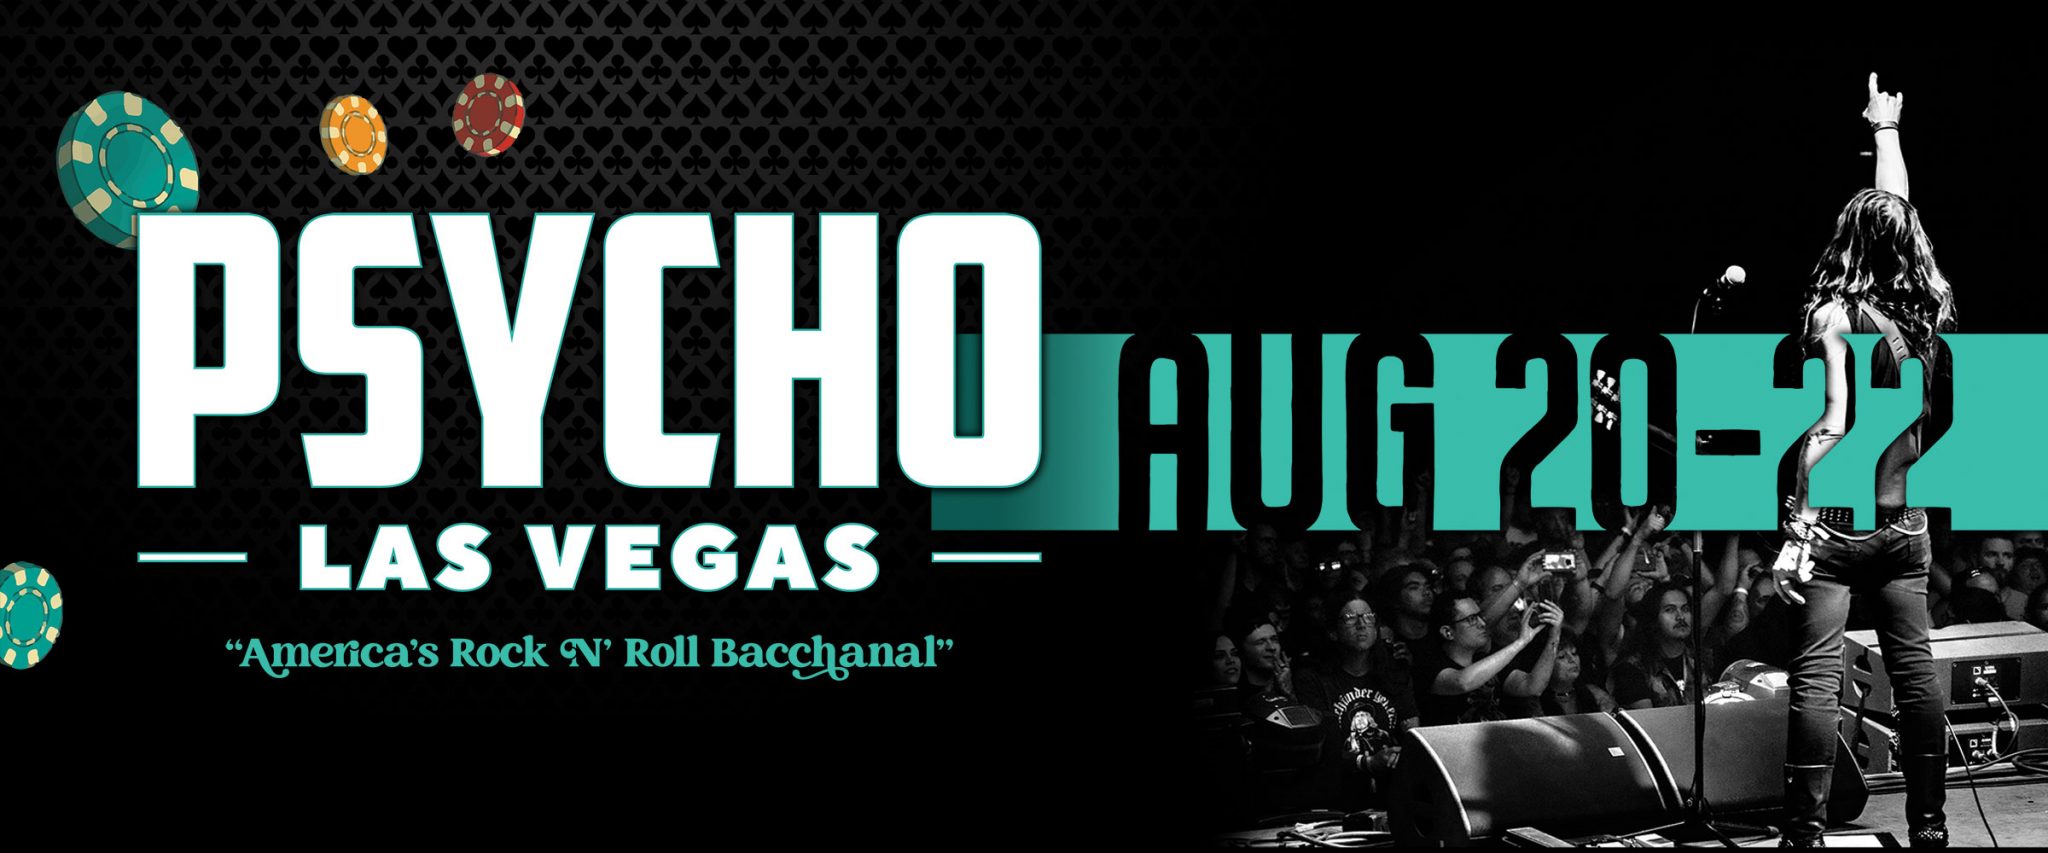 Psycho Las Vegas Mandalay Bay Psycho Unlimited Psycho Las Vegas